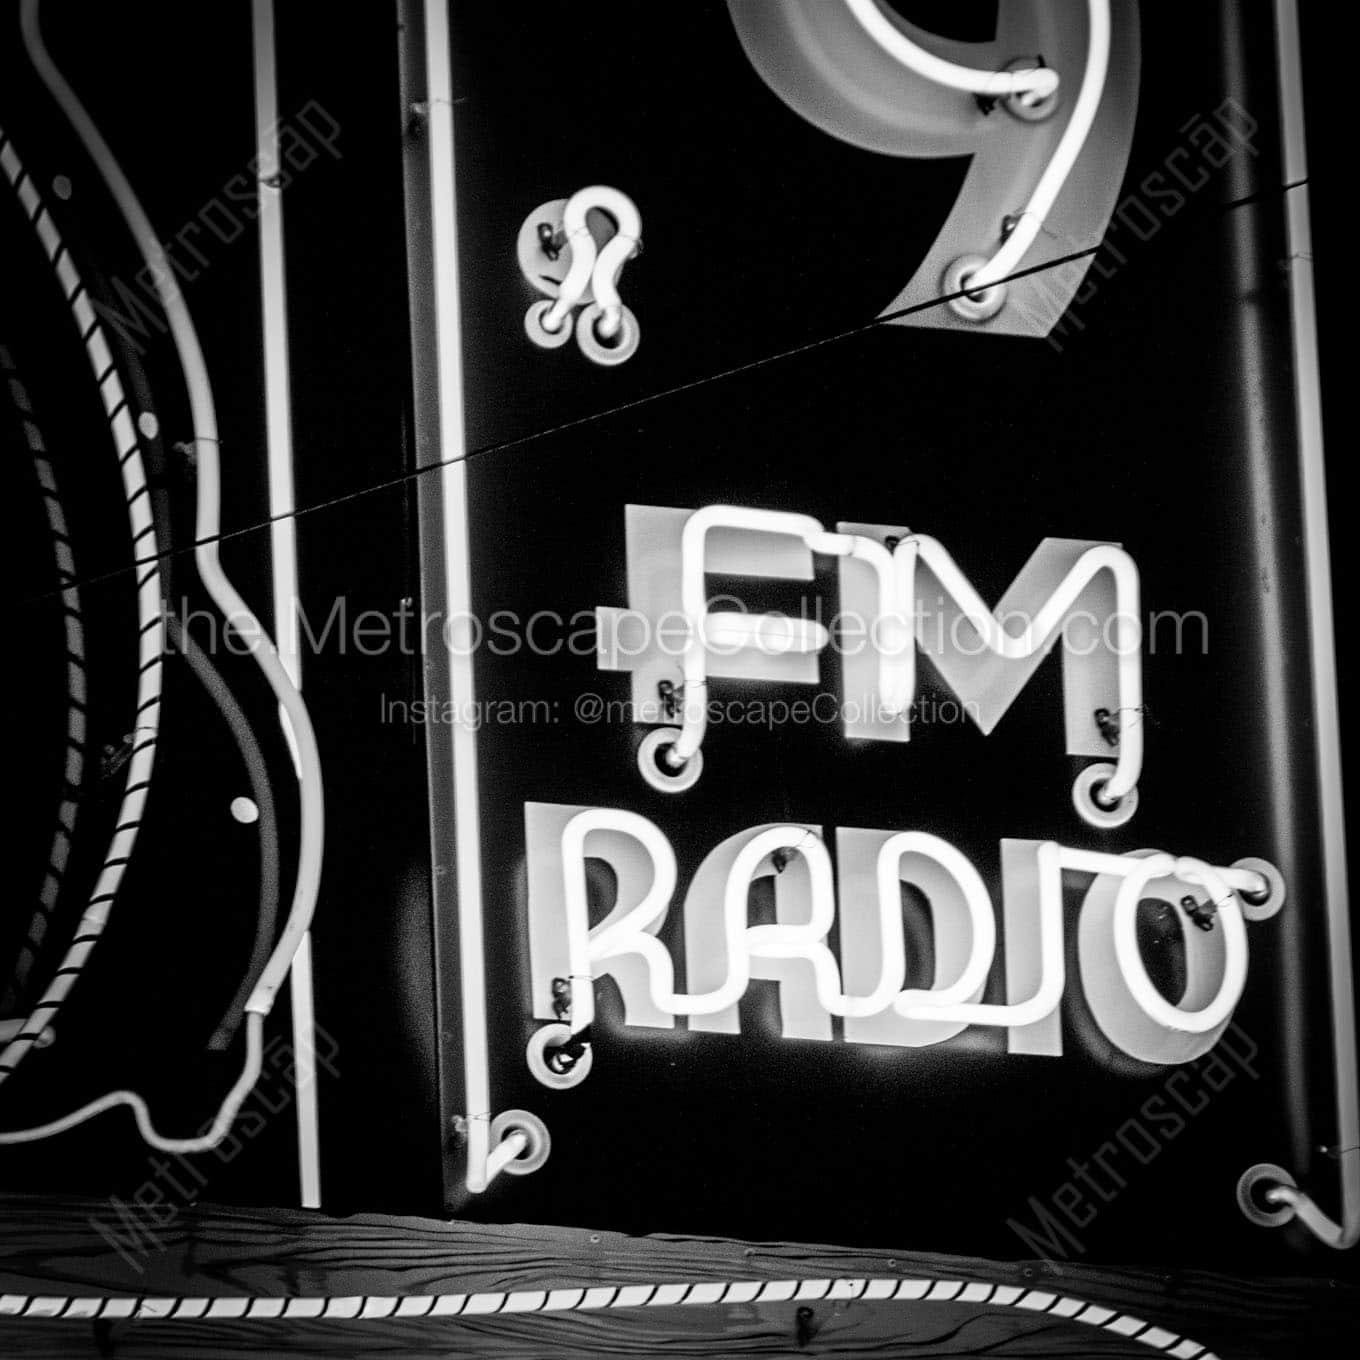 92 9 fm radio sign Black & White Wall Art